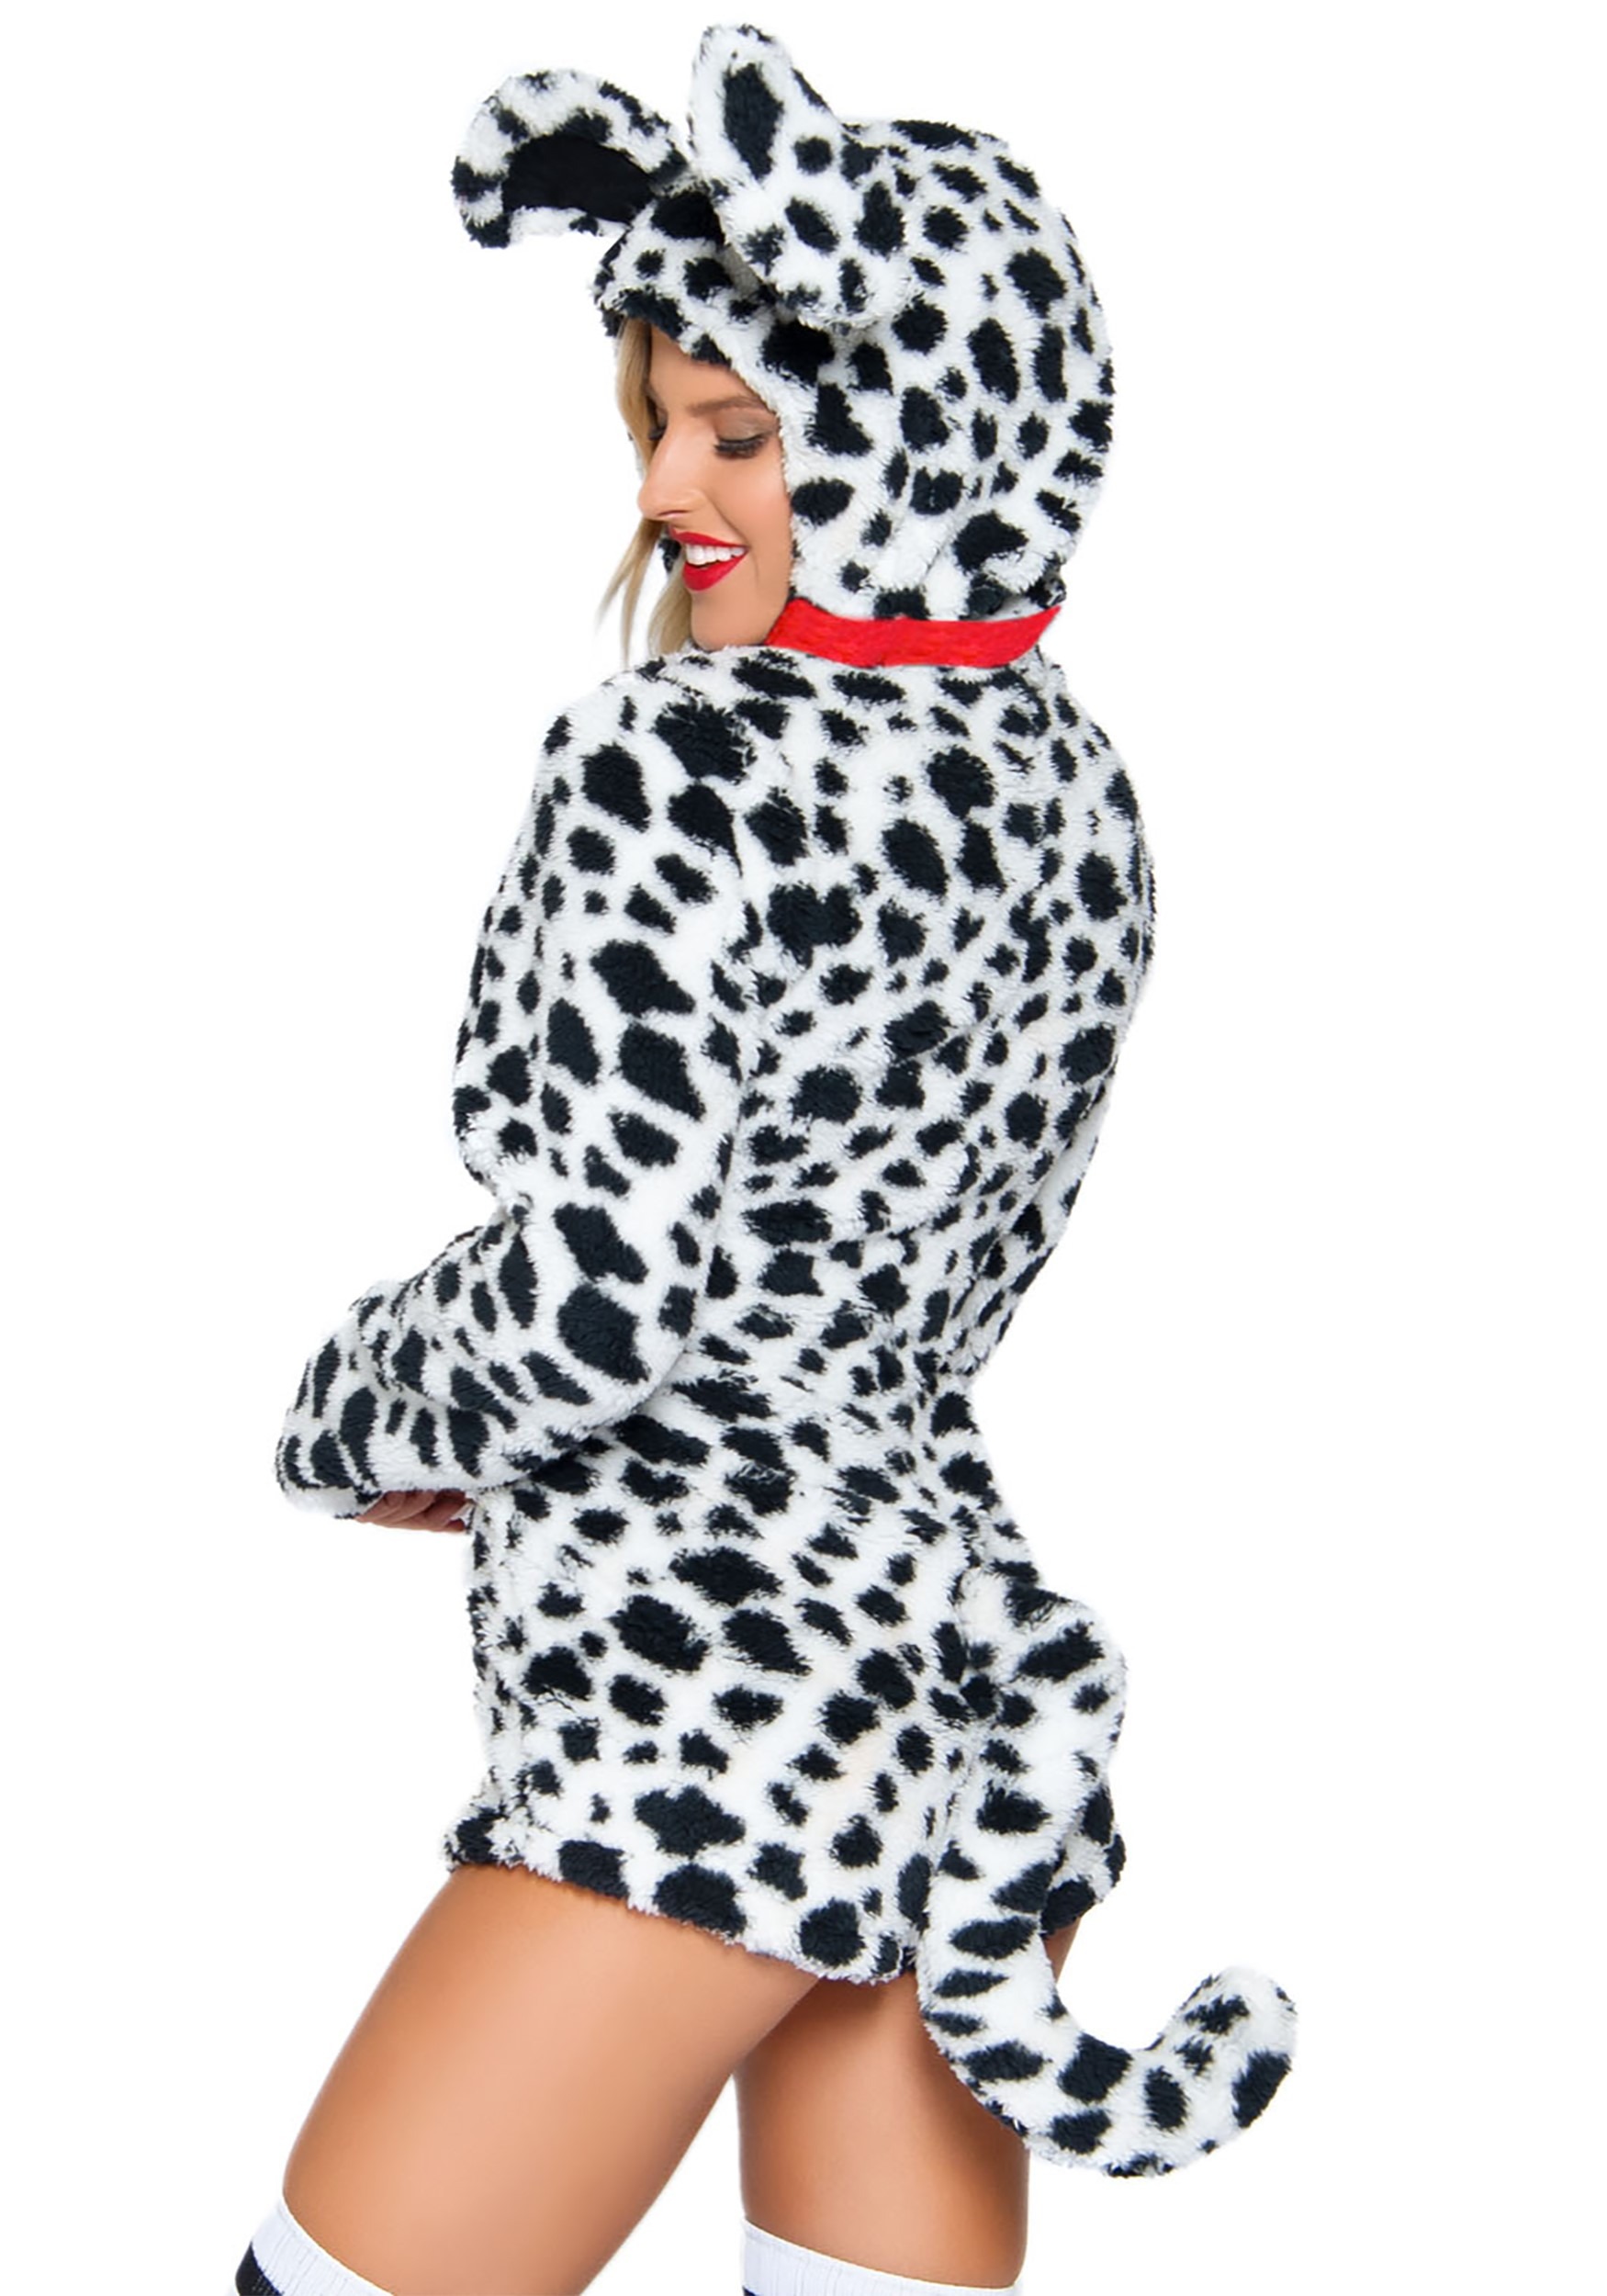 Darling Dalmatian Women's Fancy Dress Costume